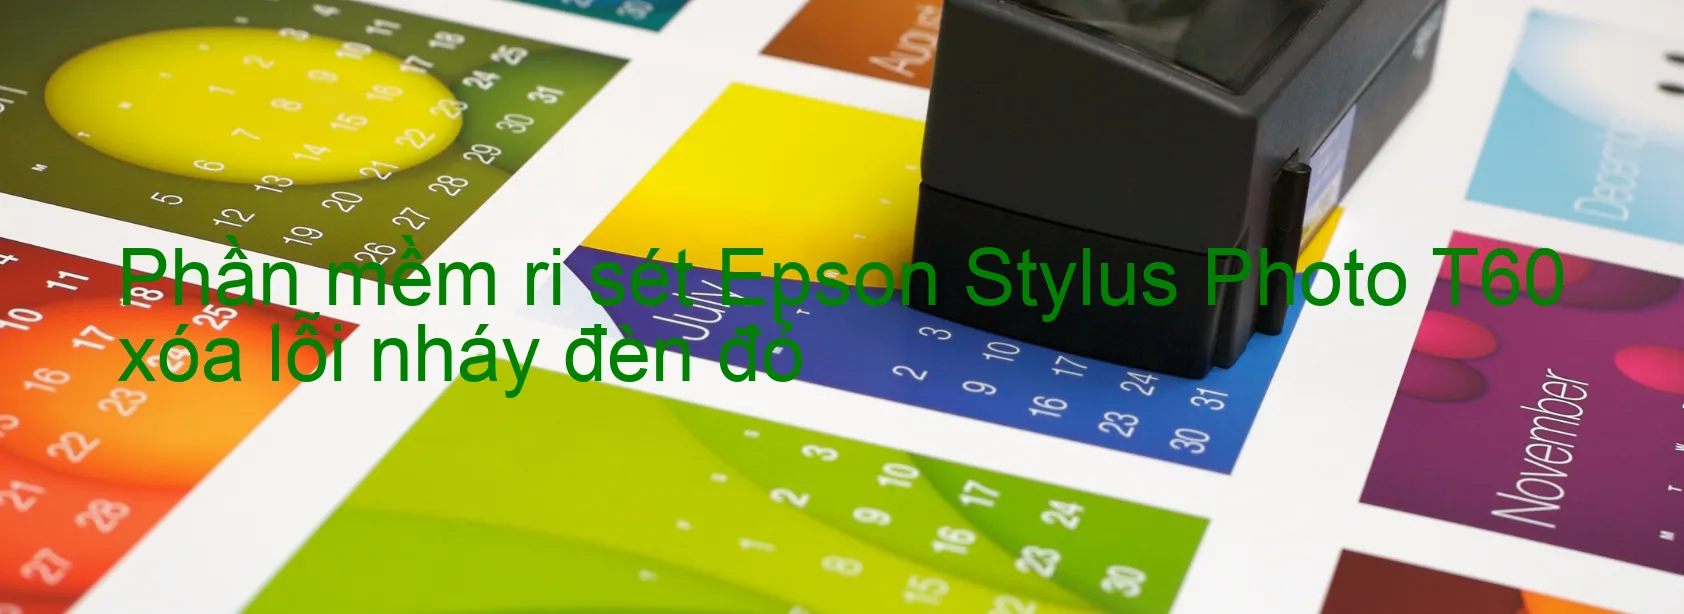 Phần mềm reset Epson Stylus Photo T60 xóa lỗi nháy đèn đỏ